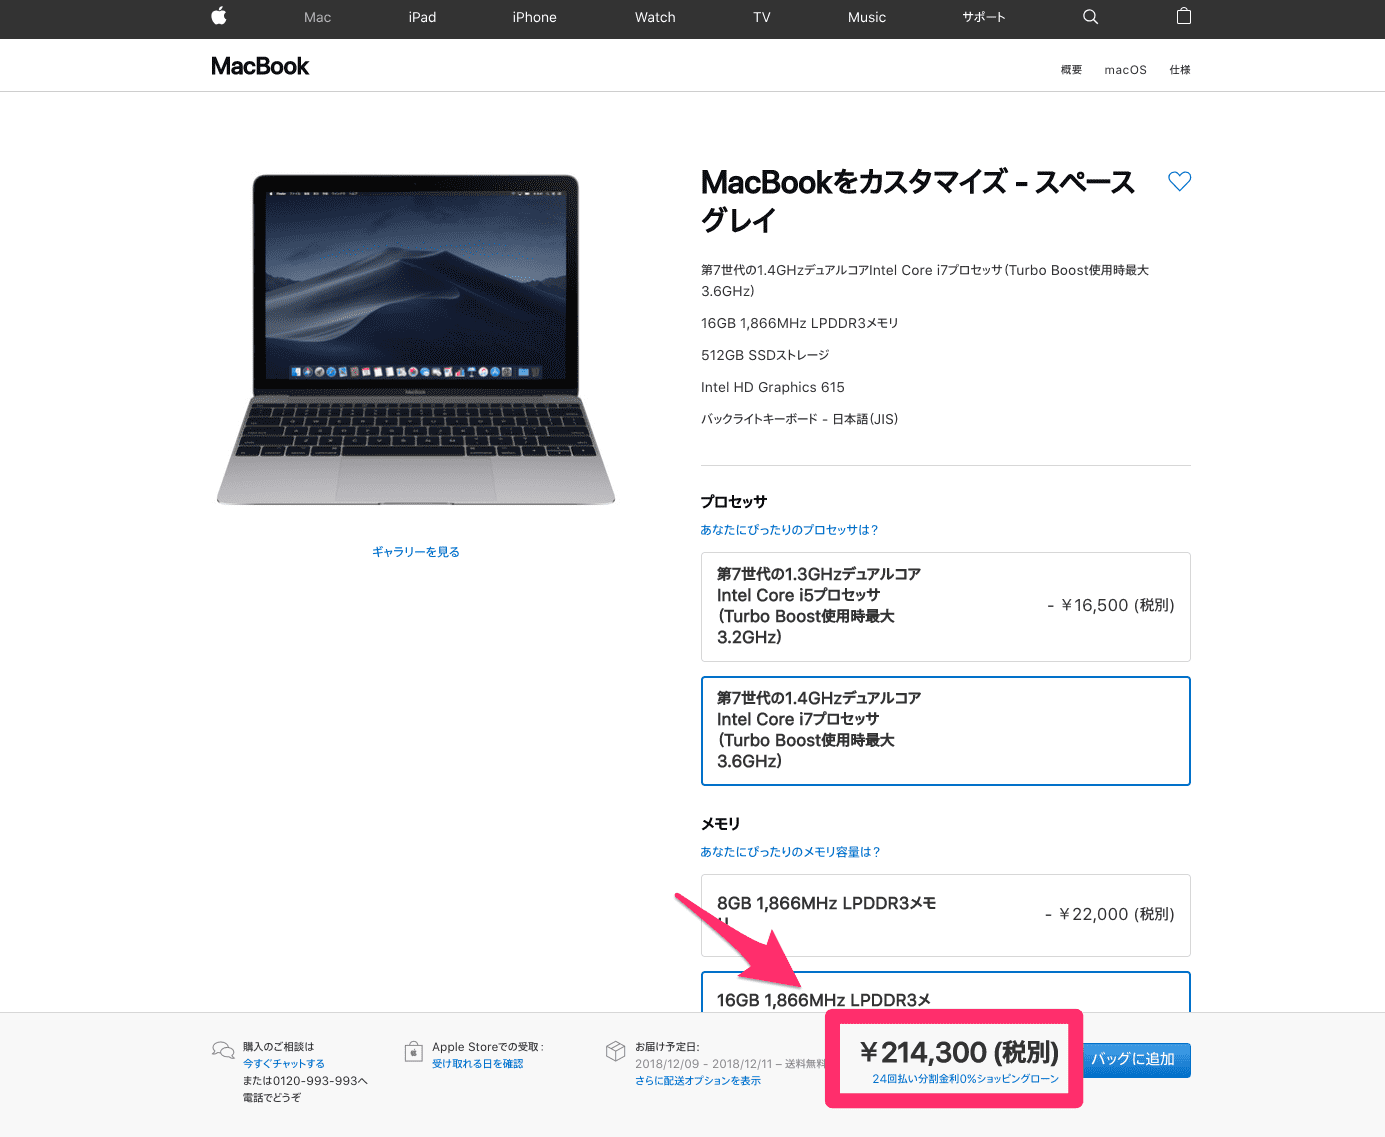  MacBookは23万円以上する